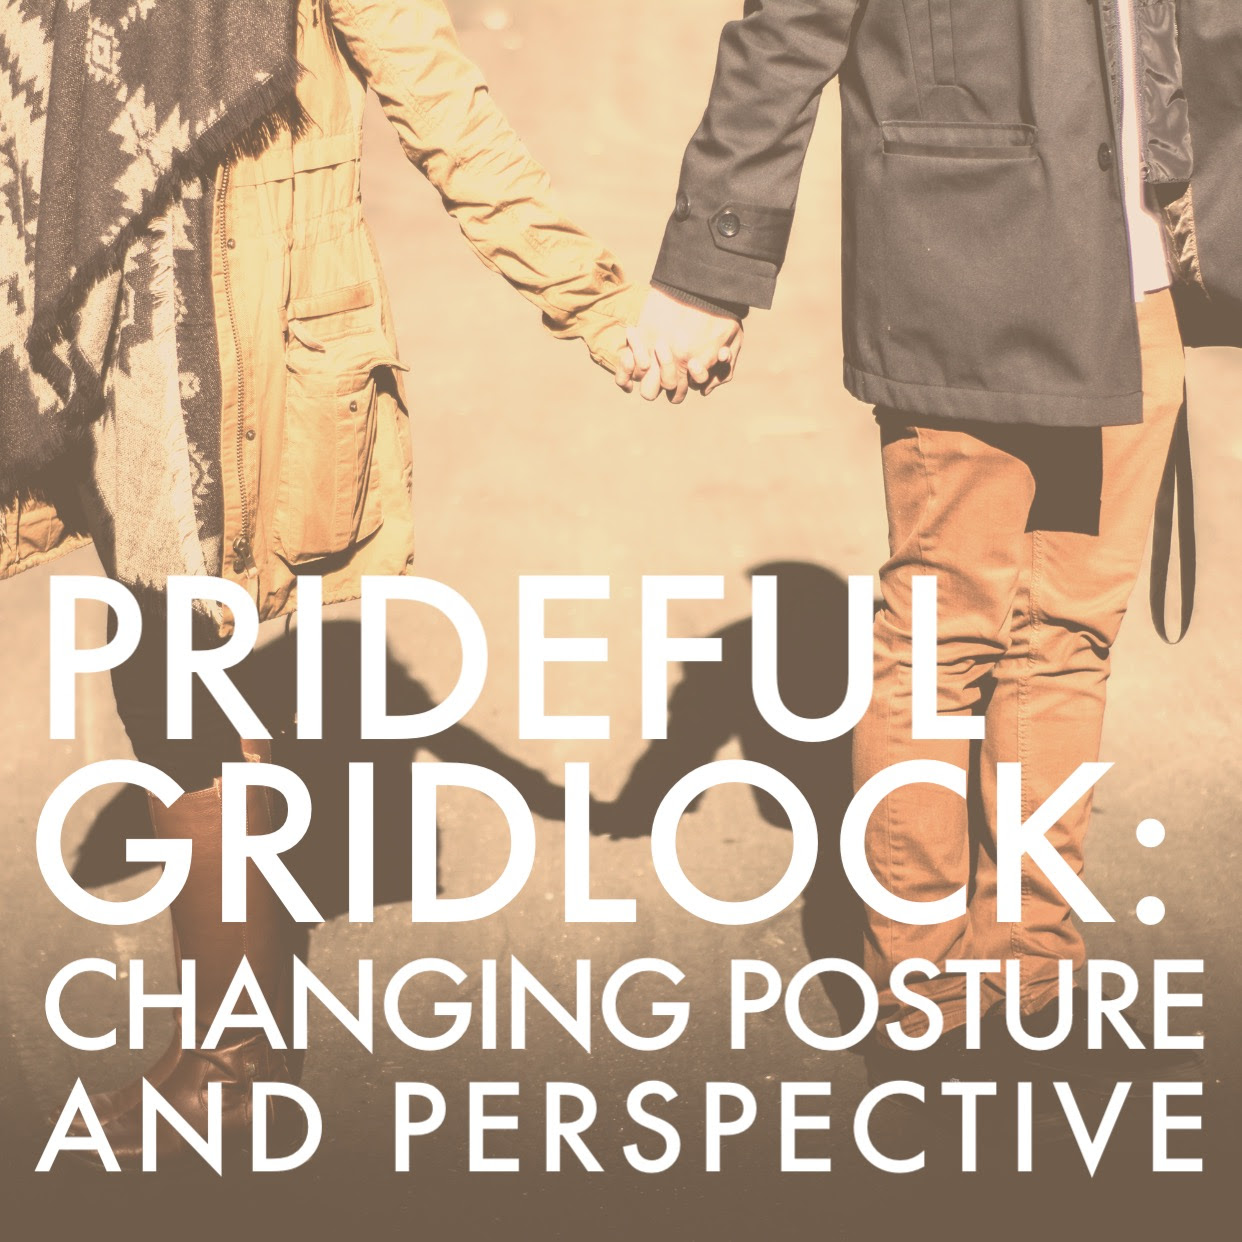 Prideful Gridlock